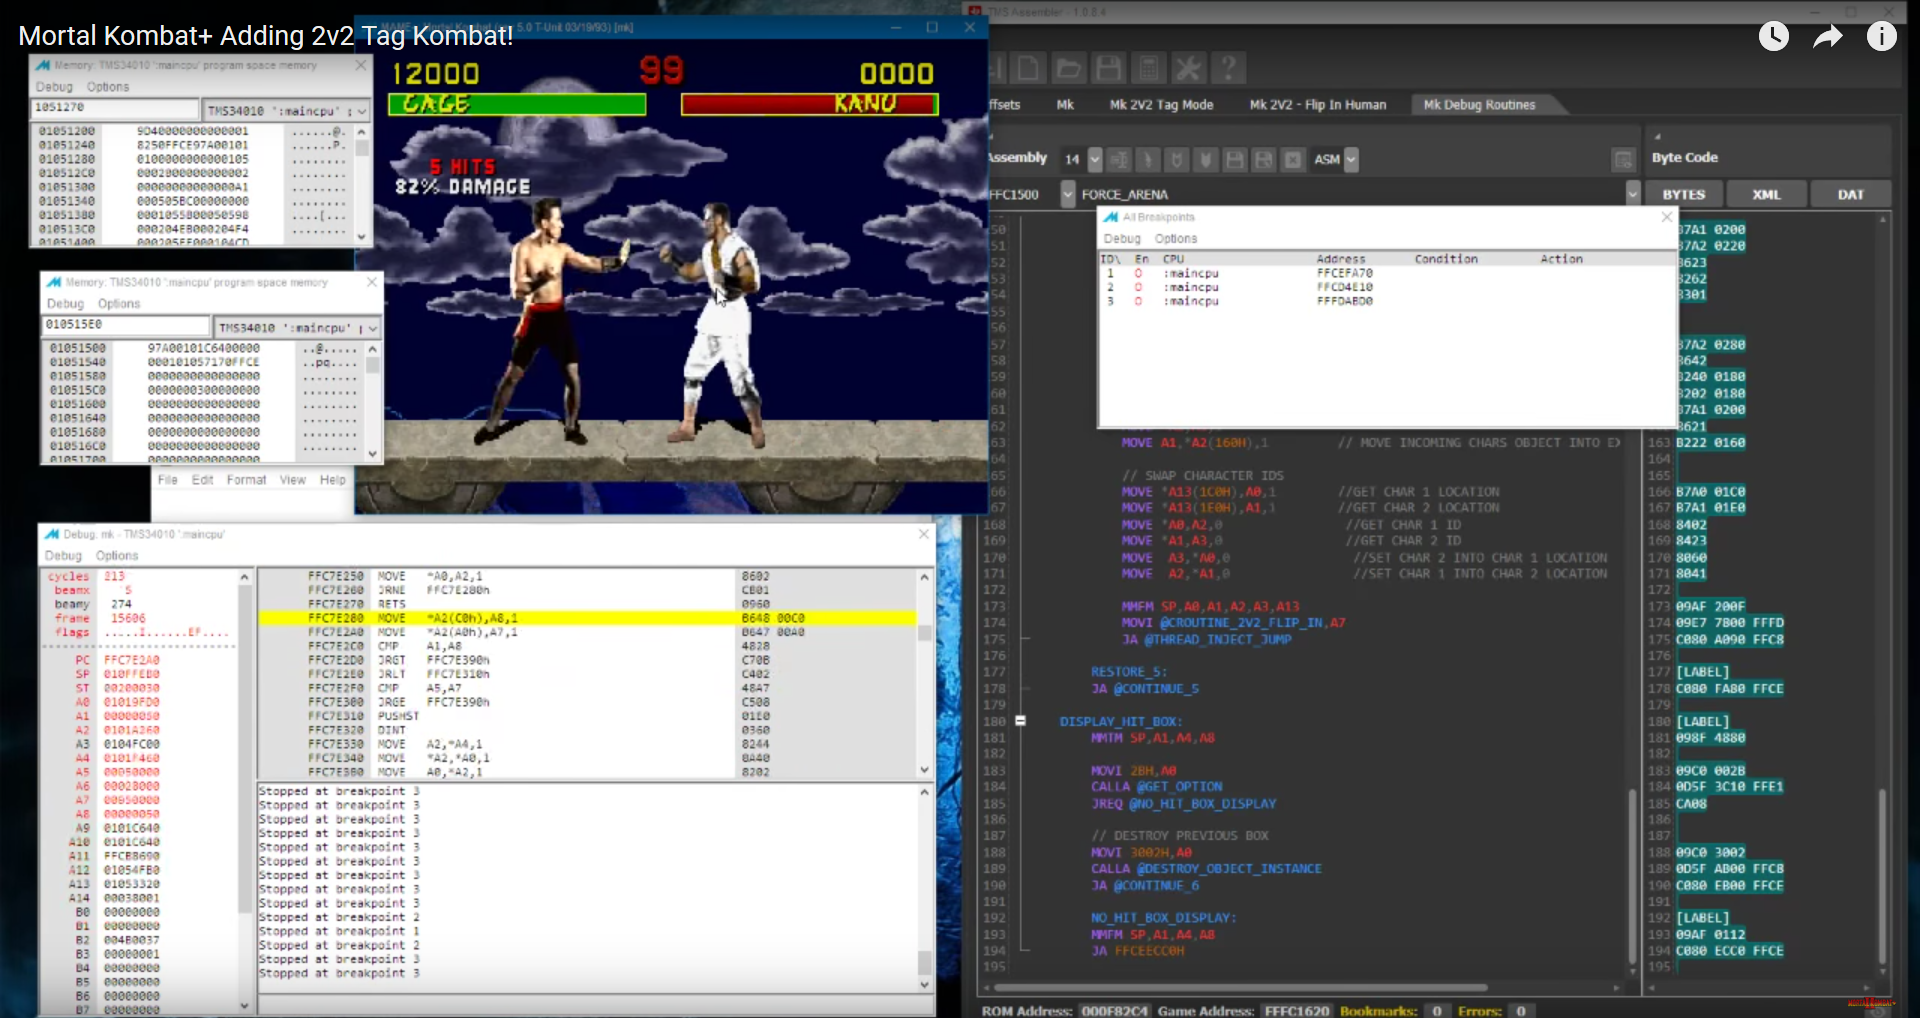 Mortal Kombat Arcade 4-Player Tag Mode